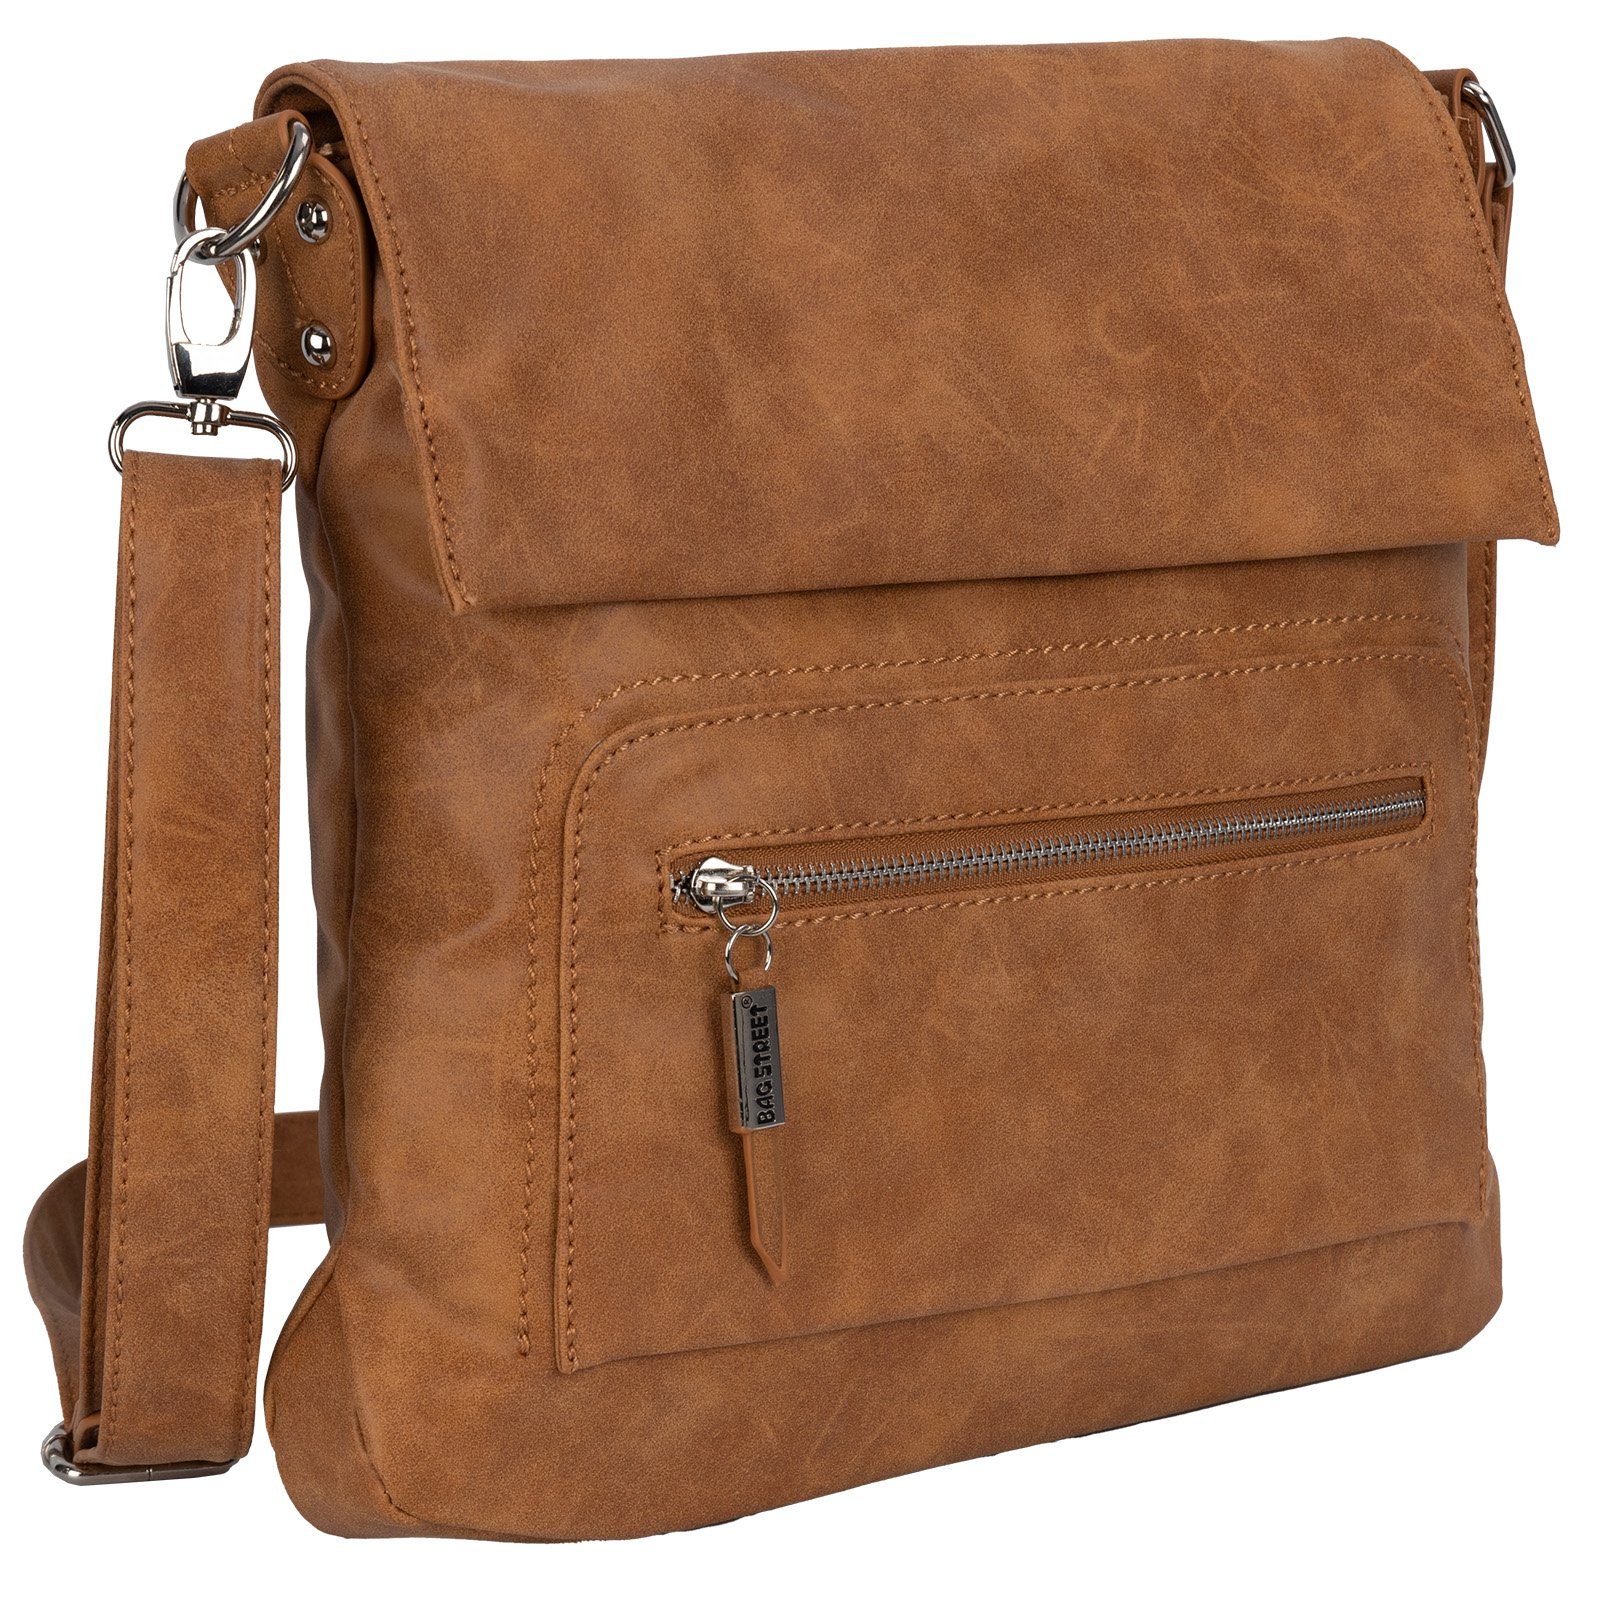 BAG STREET Schlüsseltasche Bag Street Damentasche Umhängetasche Handtasche Schultertasche T0103, als Schultertasche, Umhängetasche tragbar COGNAC